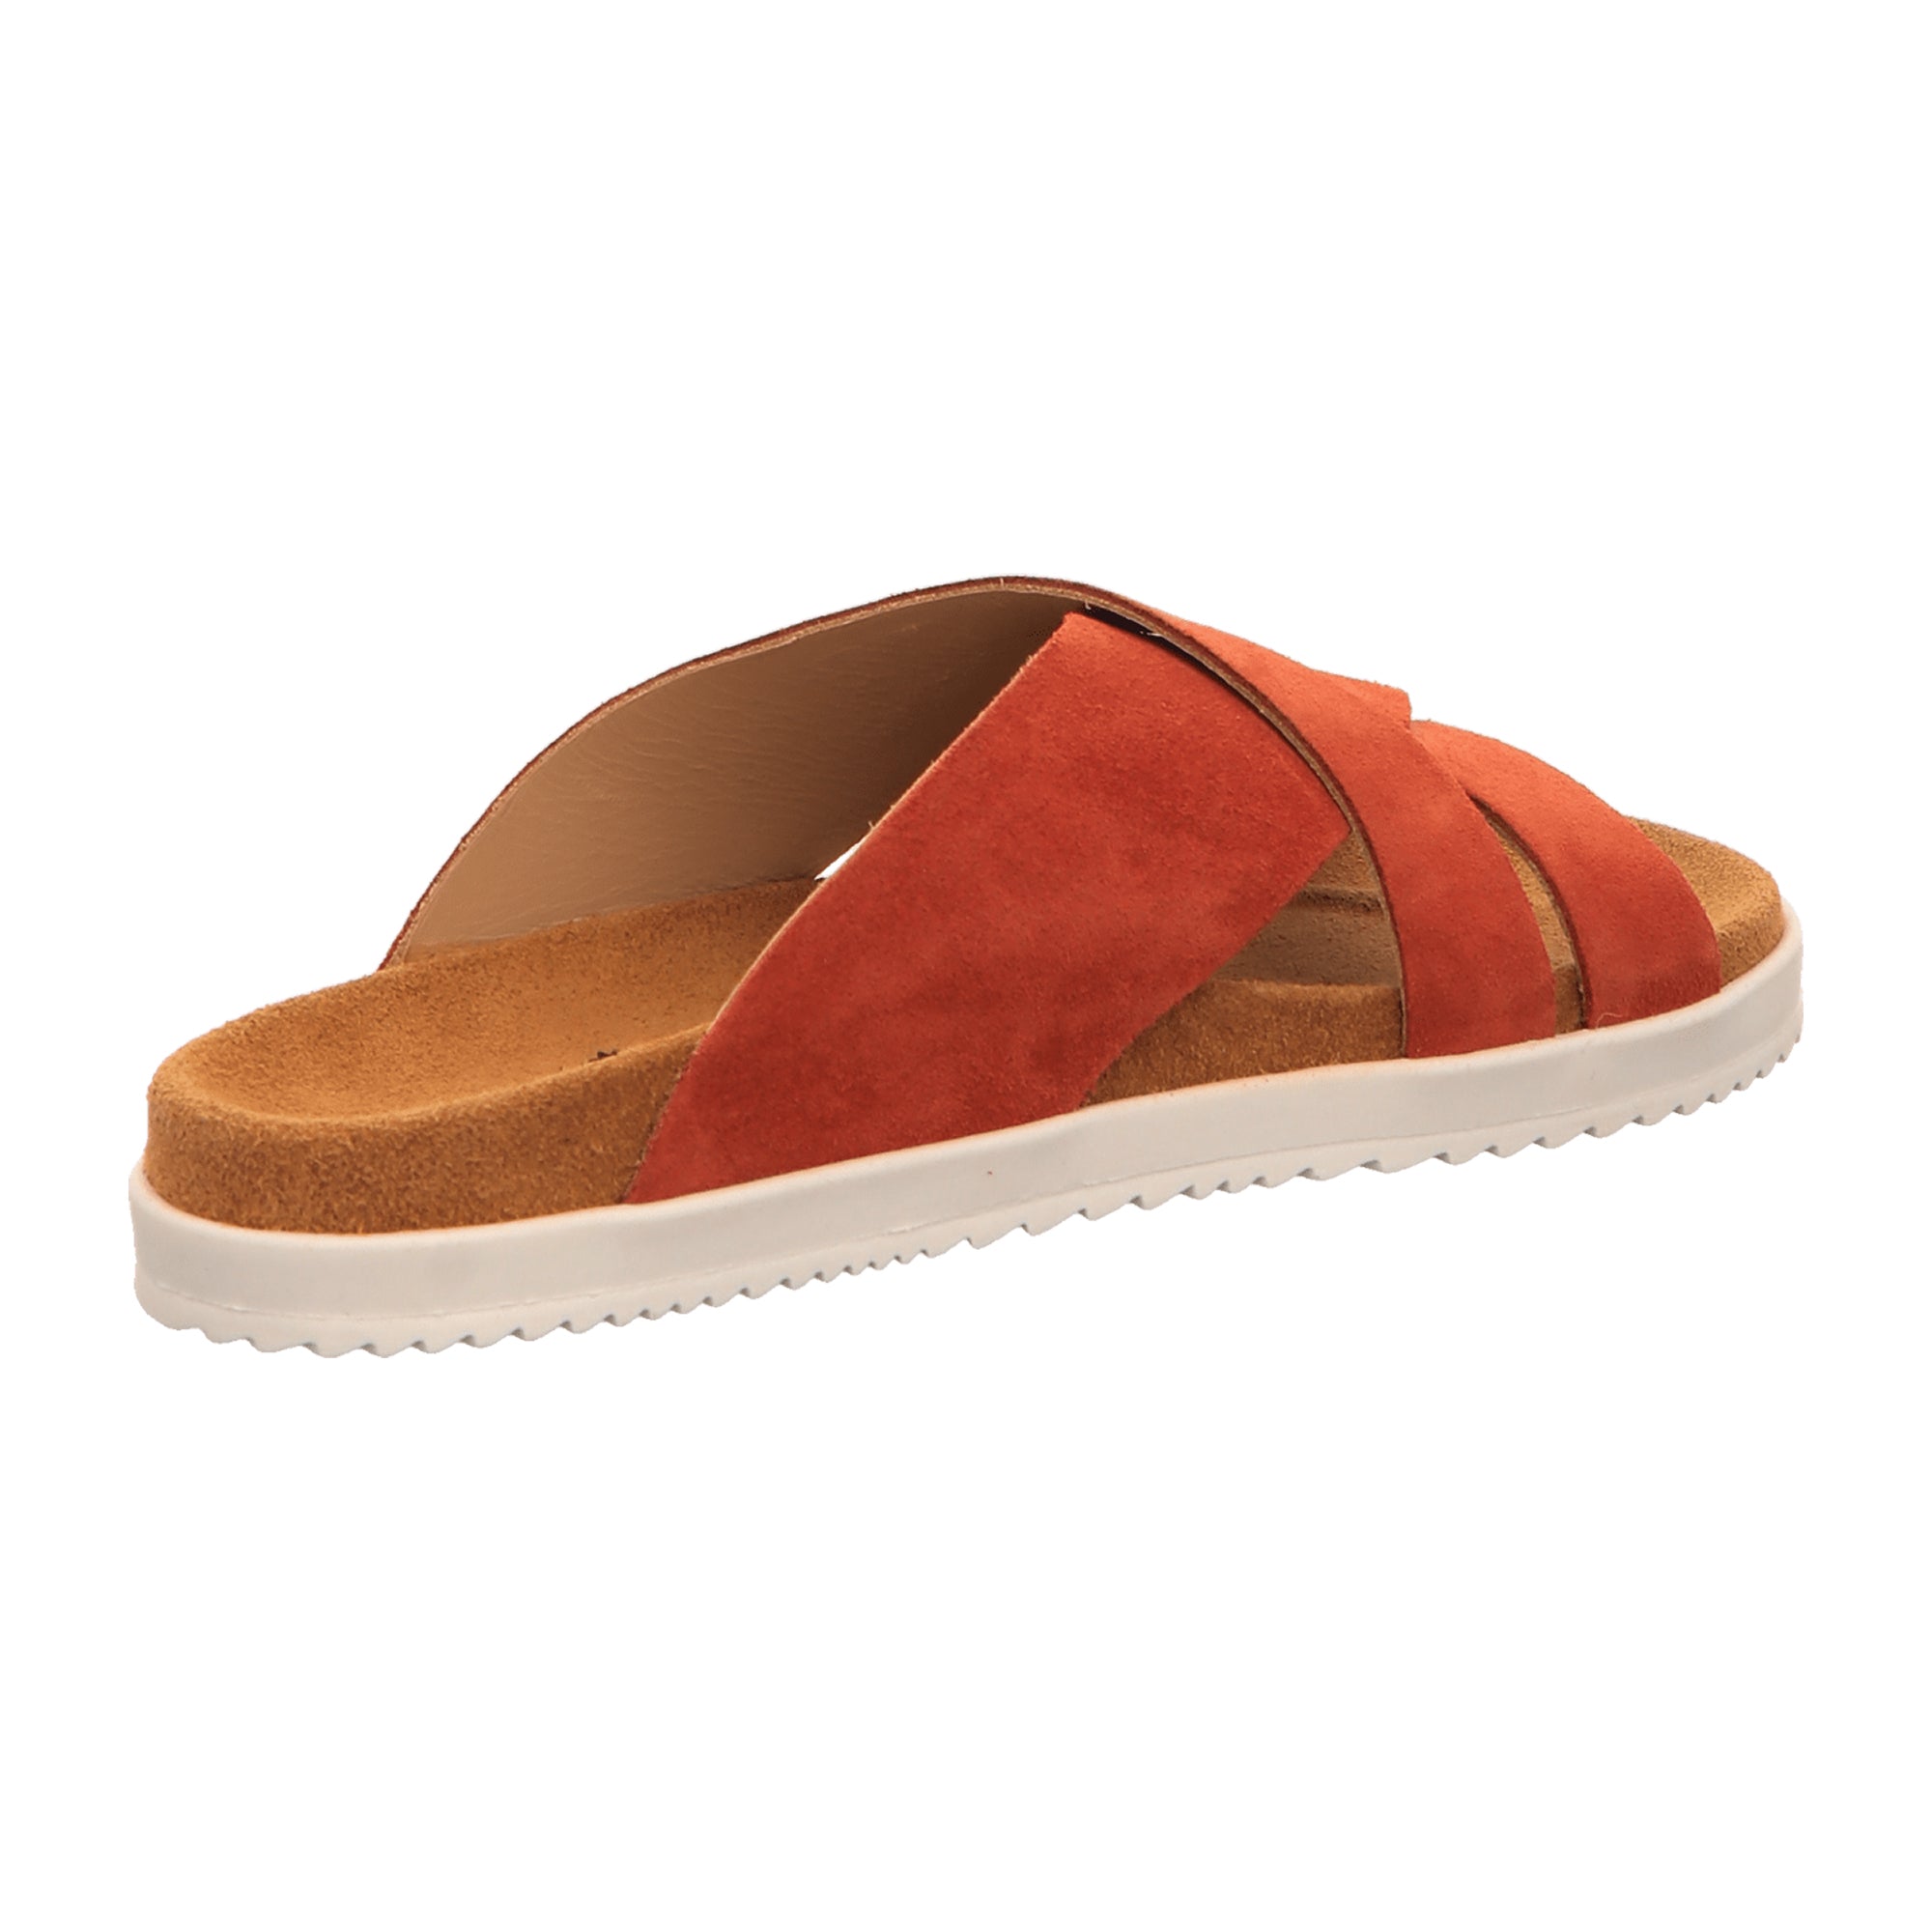 Haflinger 866008 Women's Orange Comfort Slippers - Stylish & Durable